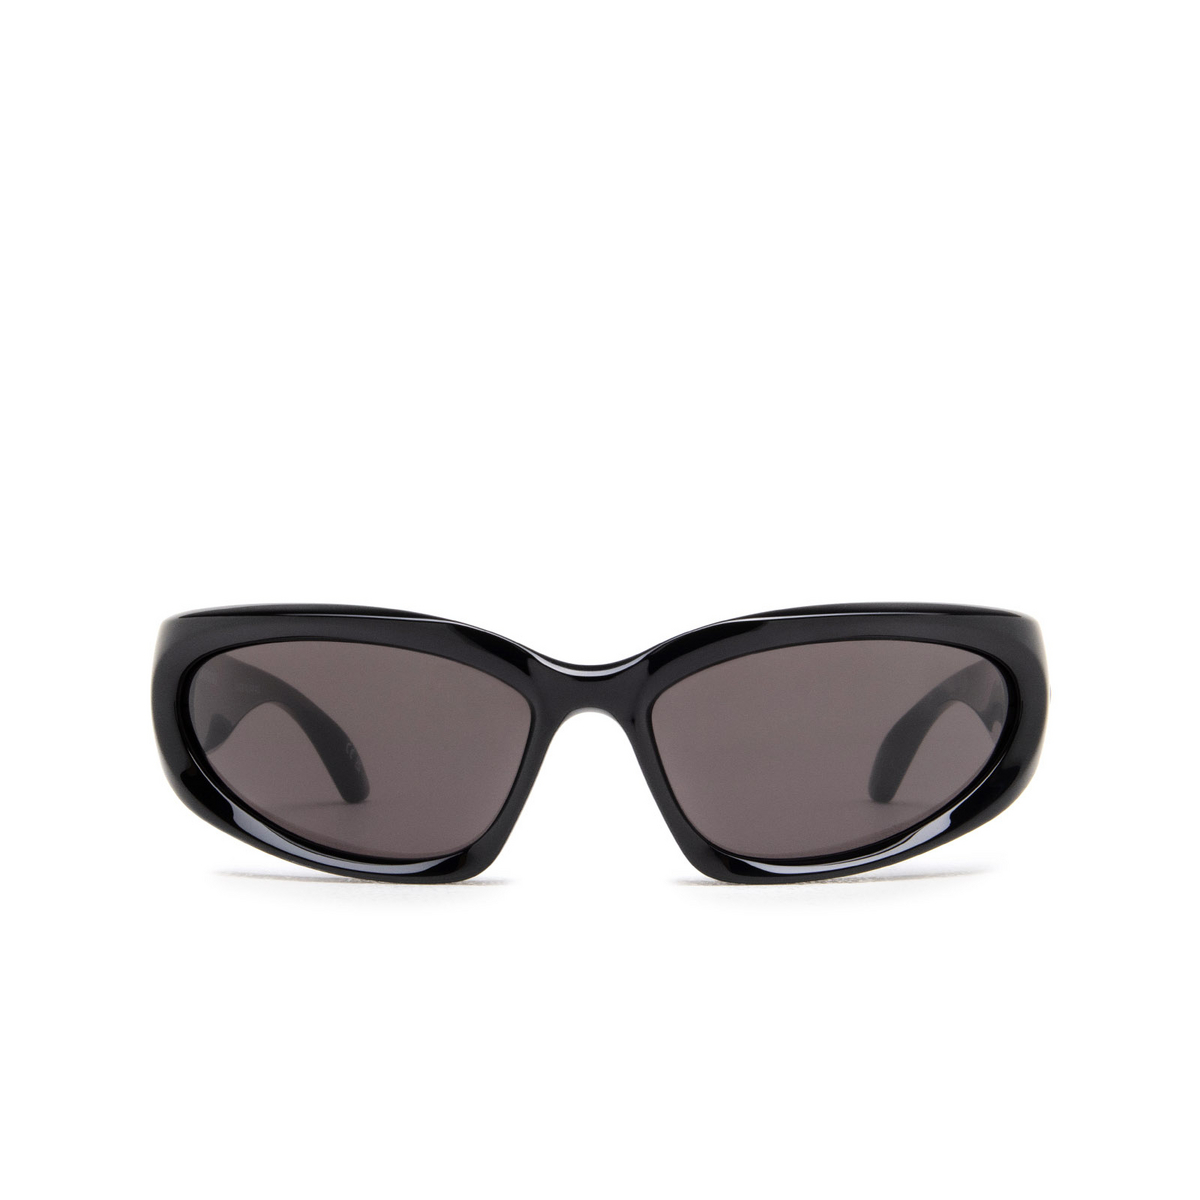 Balenciaga Swift Oval Sunglasses 001 Black - front view